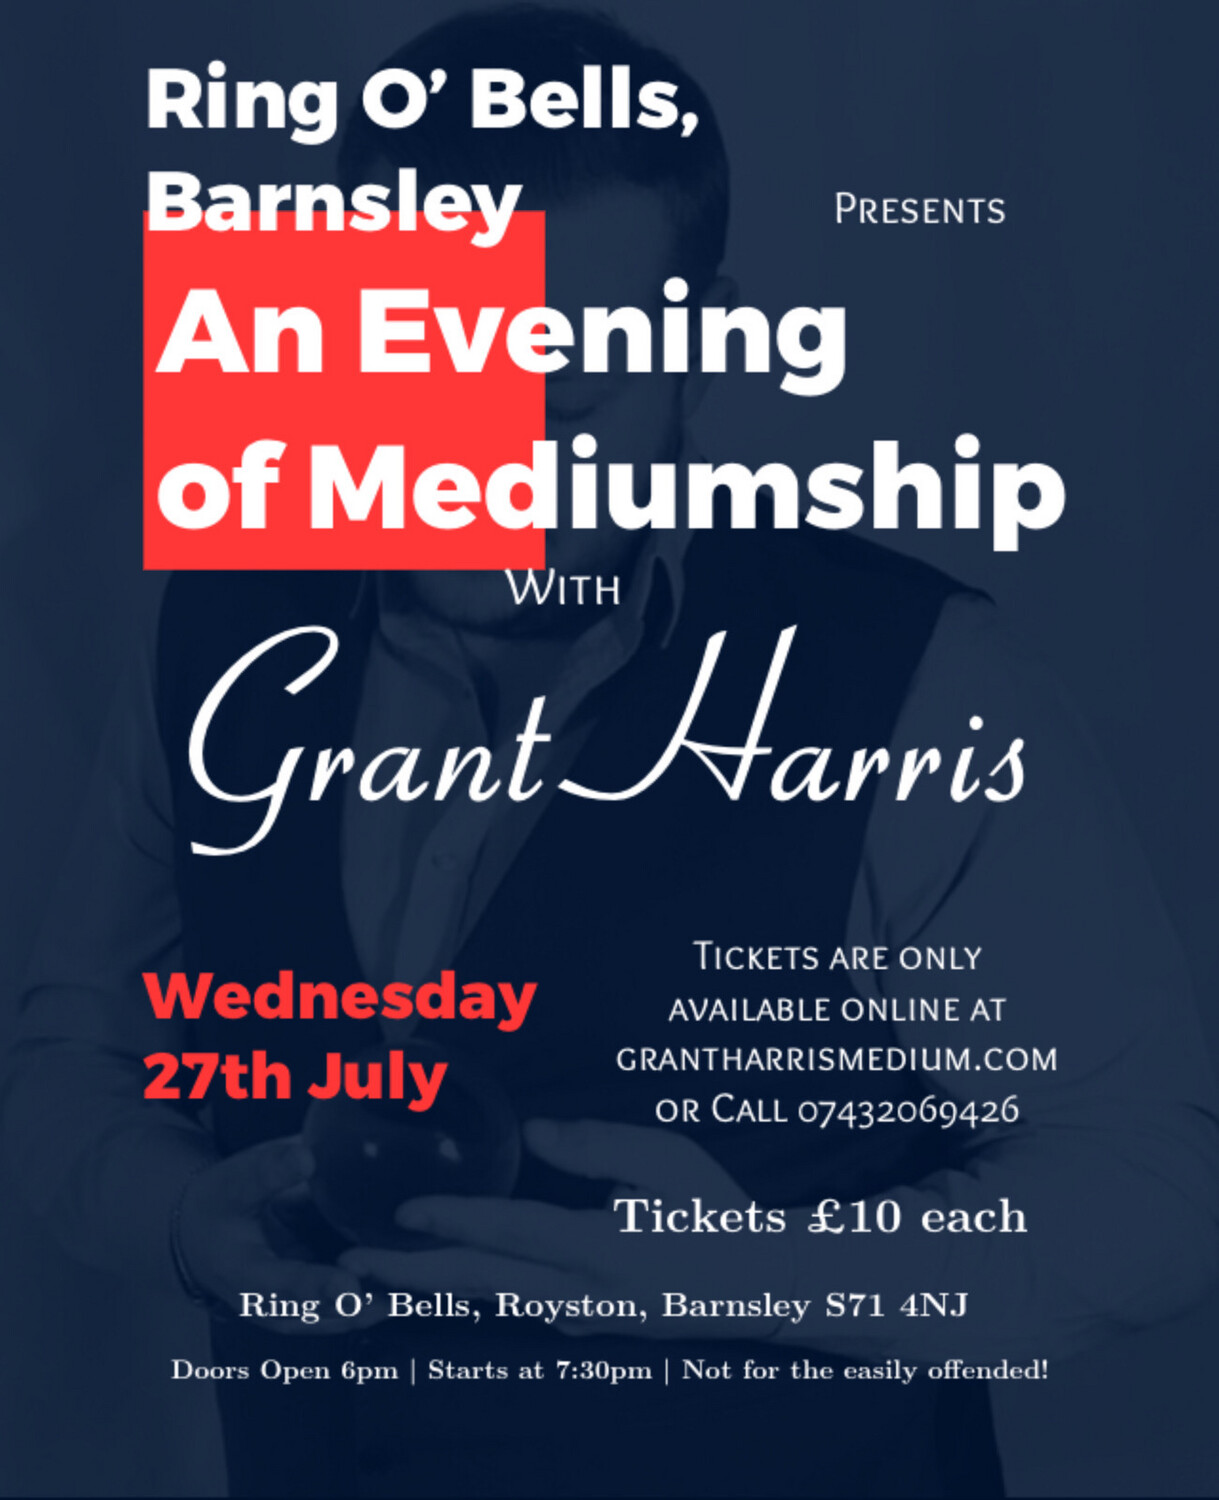 Evening of Mediumship, Ring O’ Bells, Royston, Wed 27th July 2022